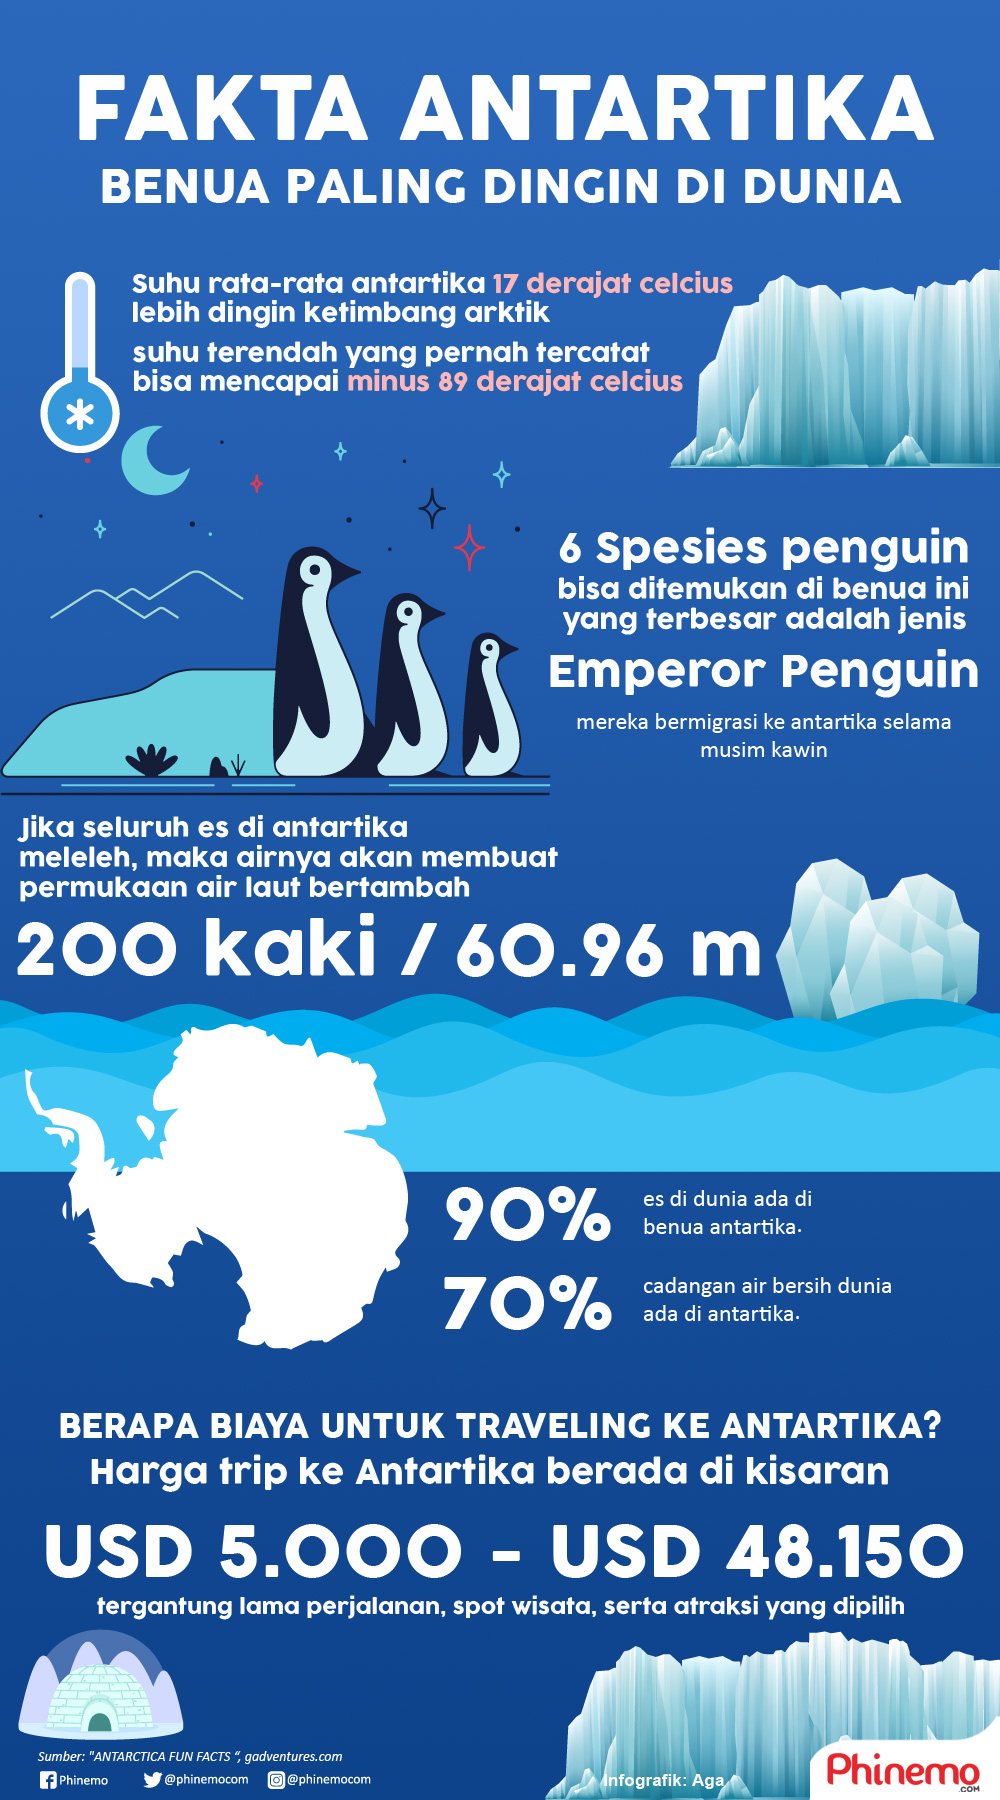 Benarkah benua antartika merupakan kawasan paling dingin di dunia